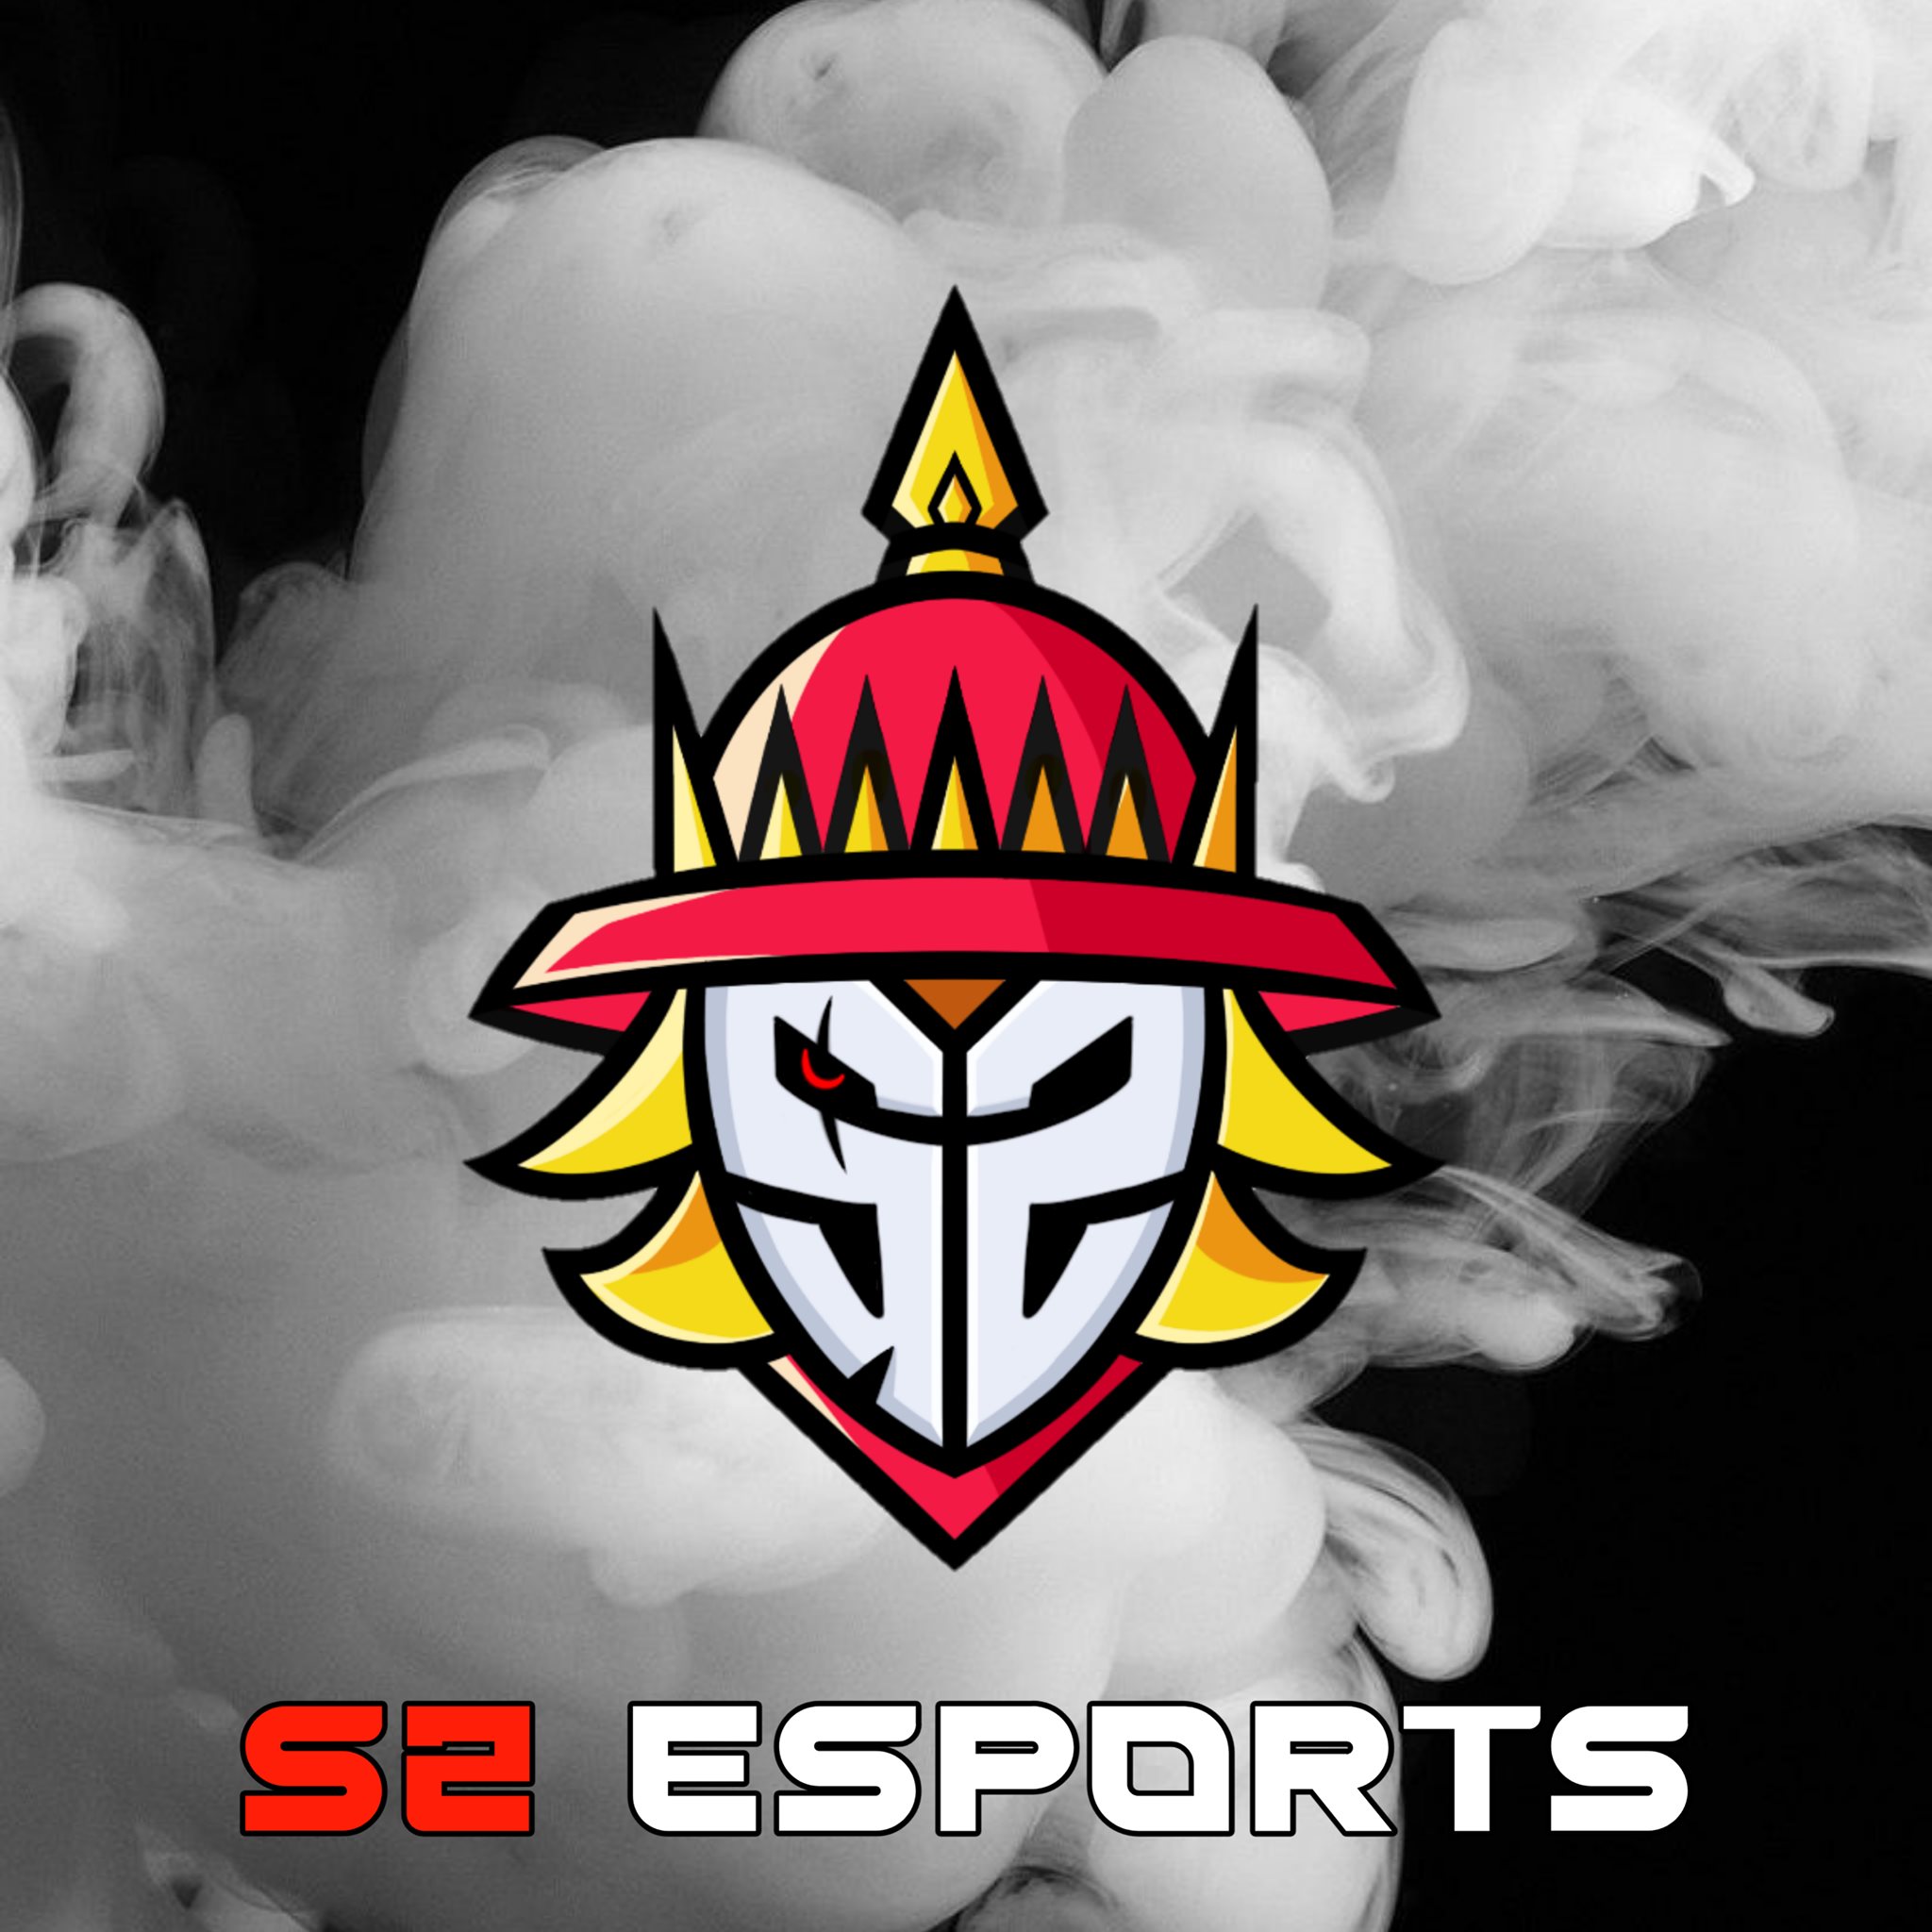 S2 eSport team logo